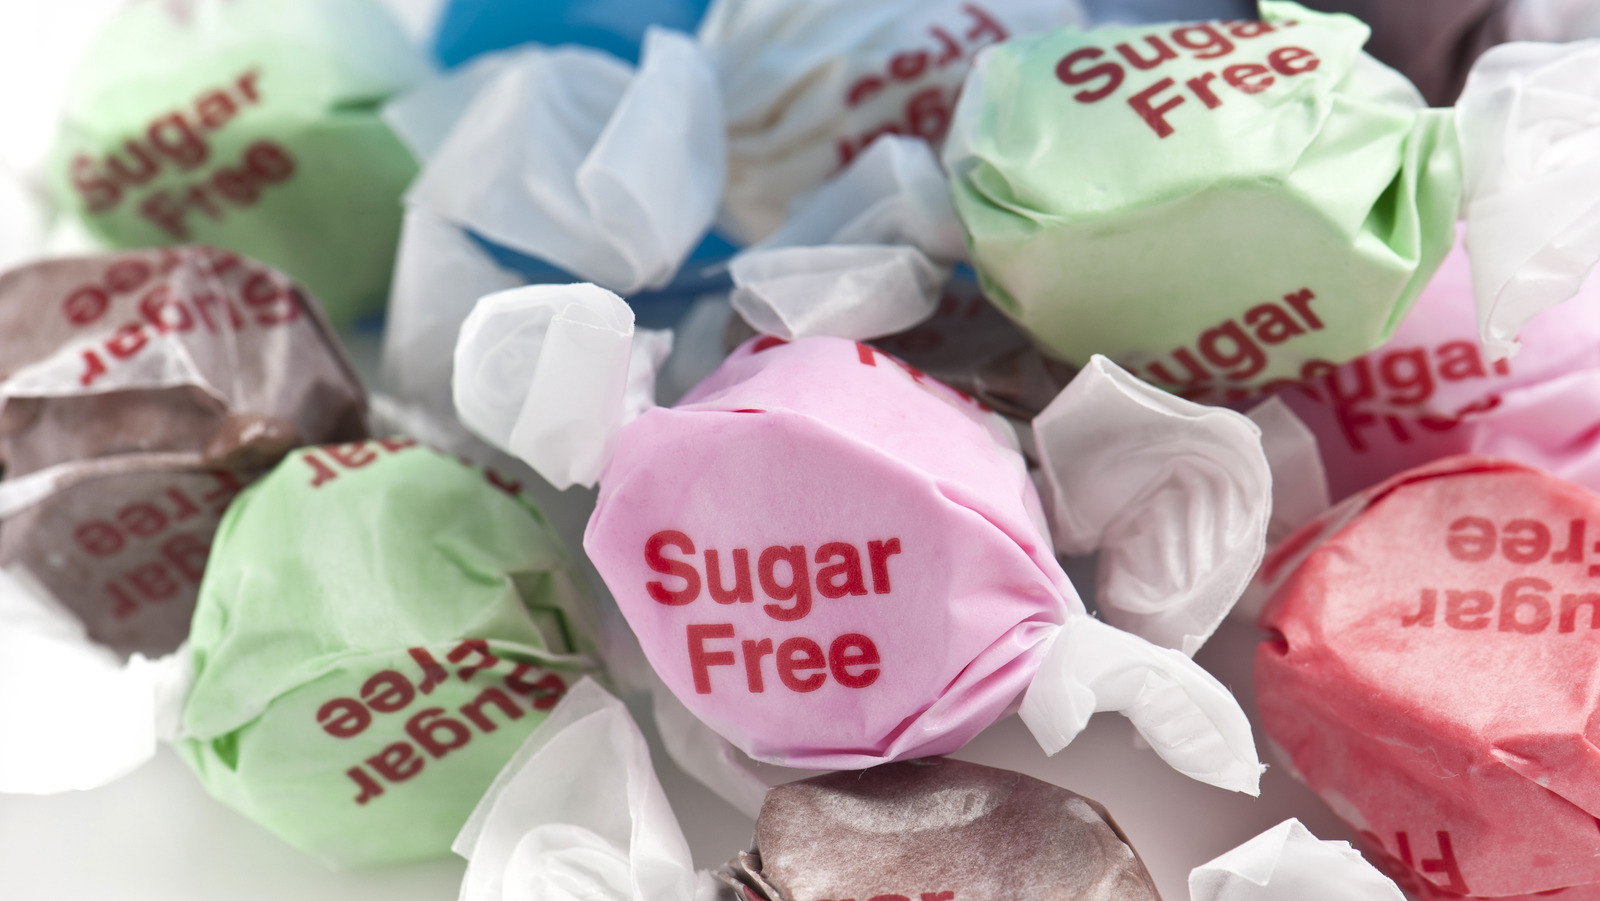 Brach's Sugar Free Candy in Candy 